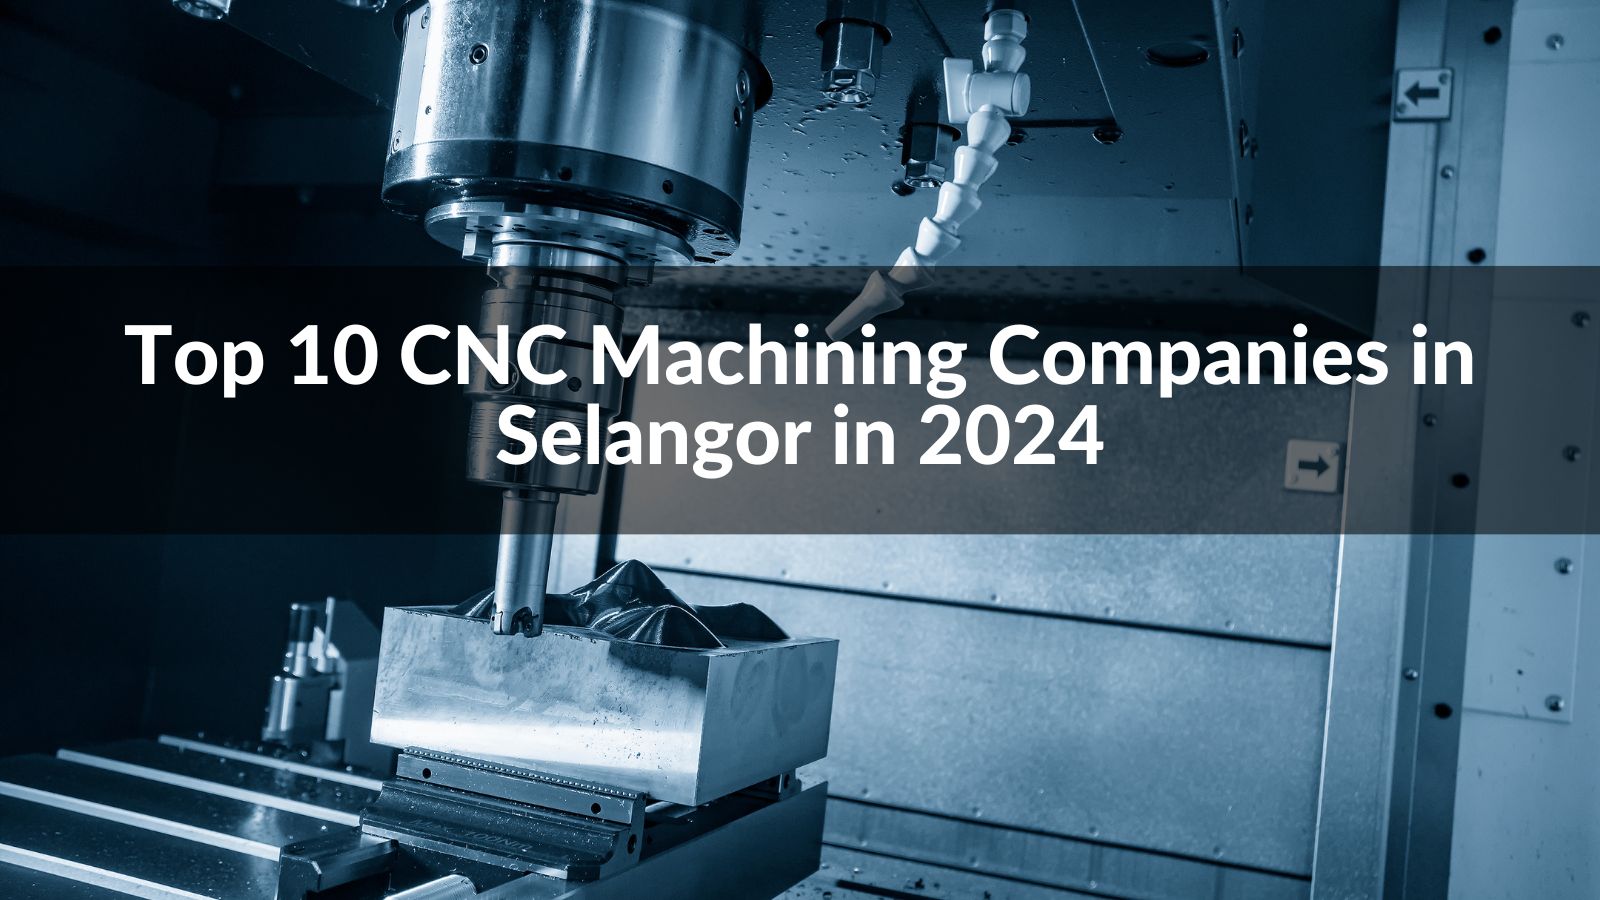 Top 10 CNC Machining Companies in Selangor in 2024